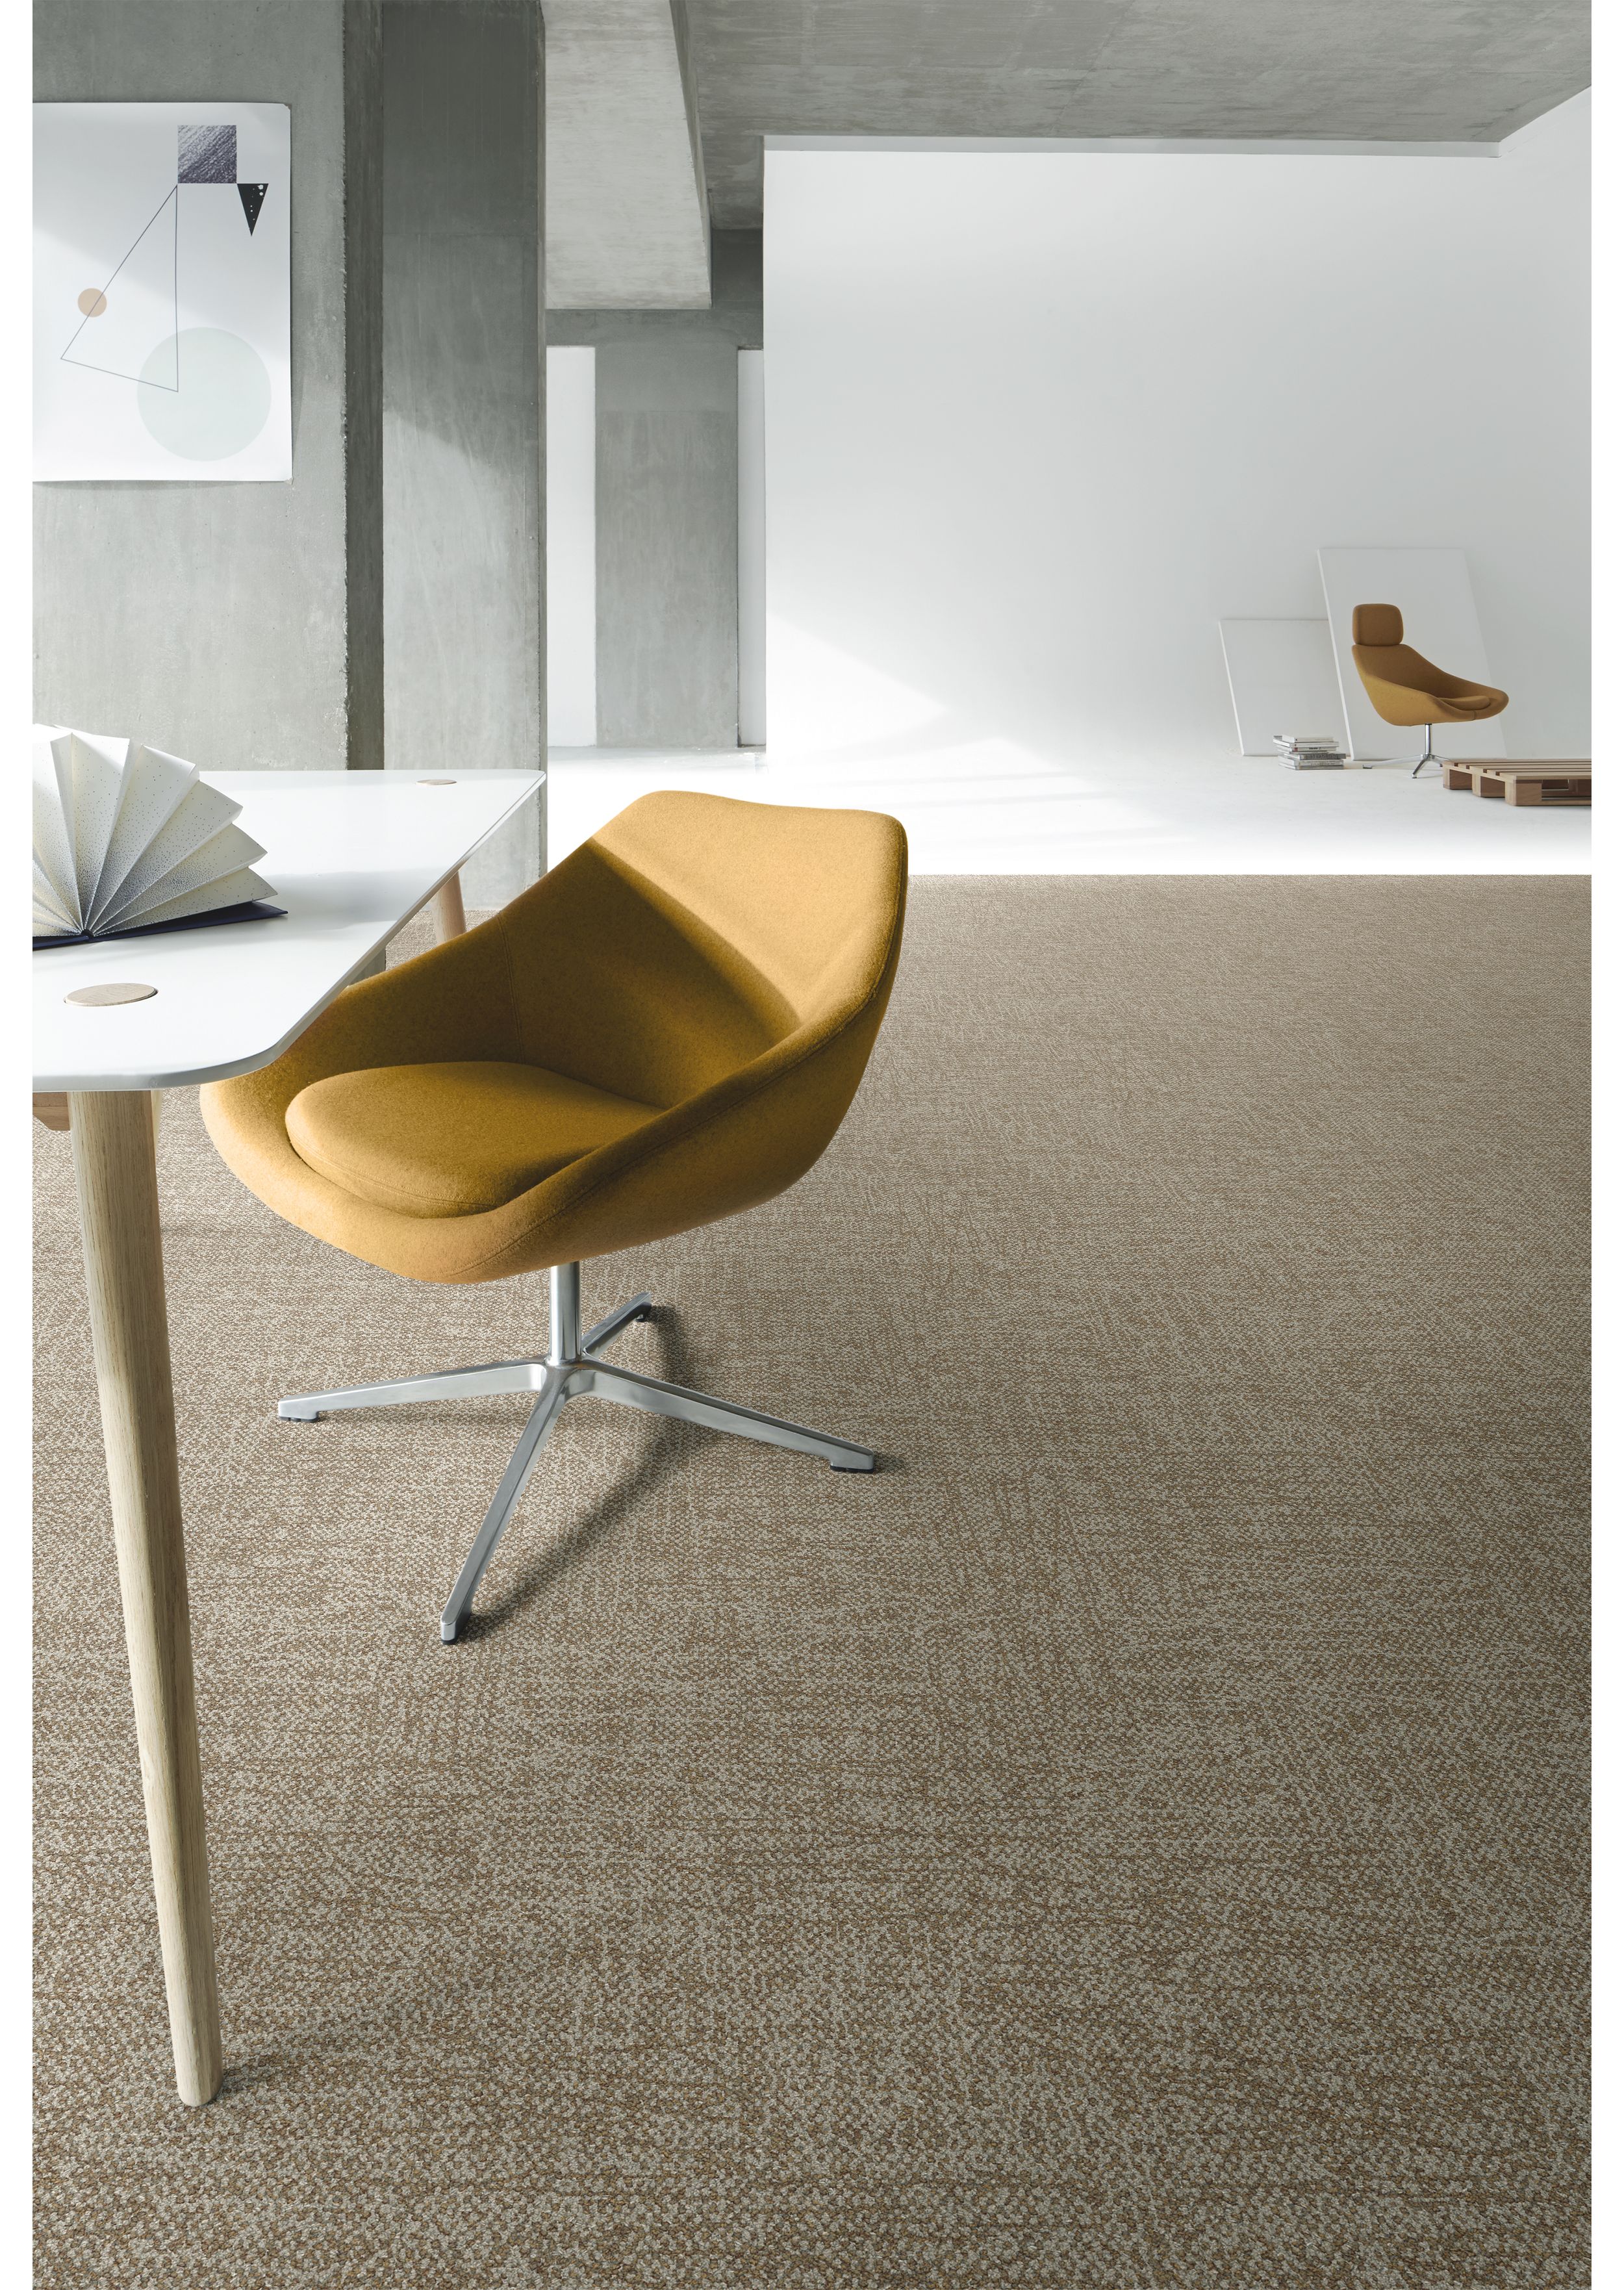 Interface Third Space 306 carpet tile in open office space  imagen número 2